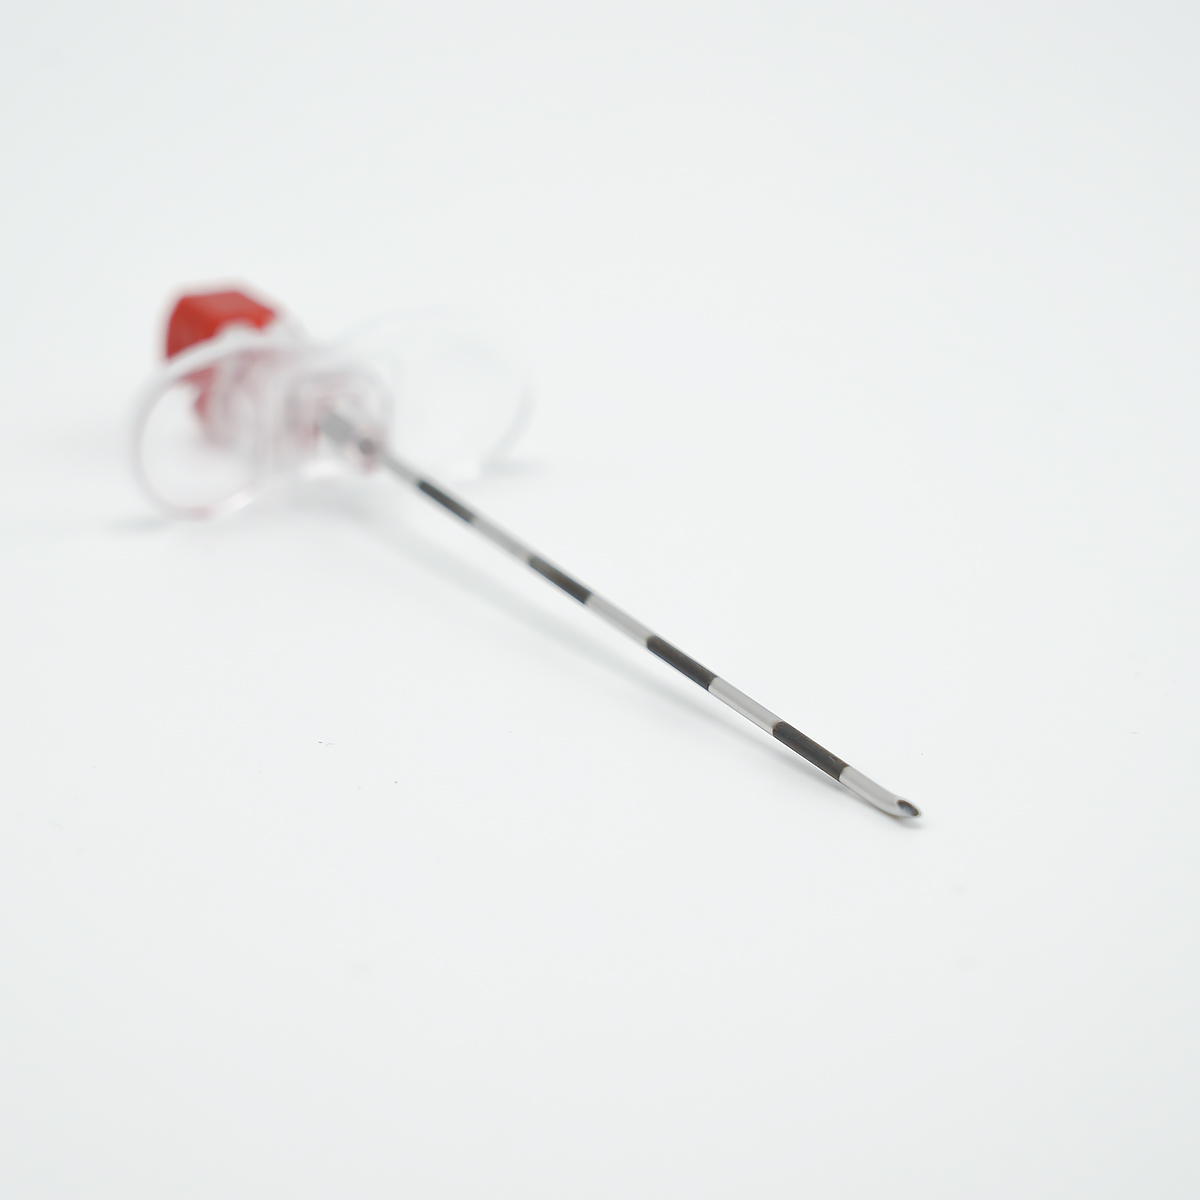 Tuohy epidural needles